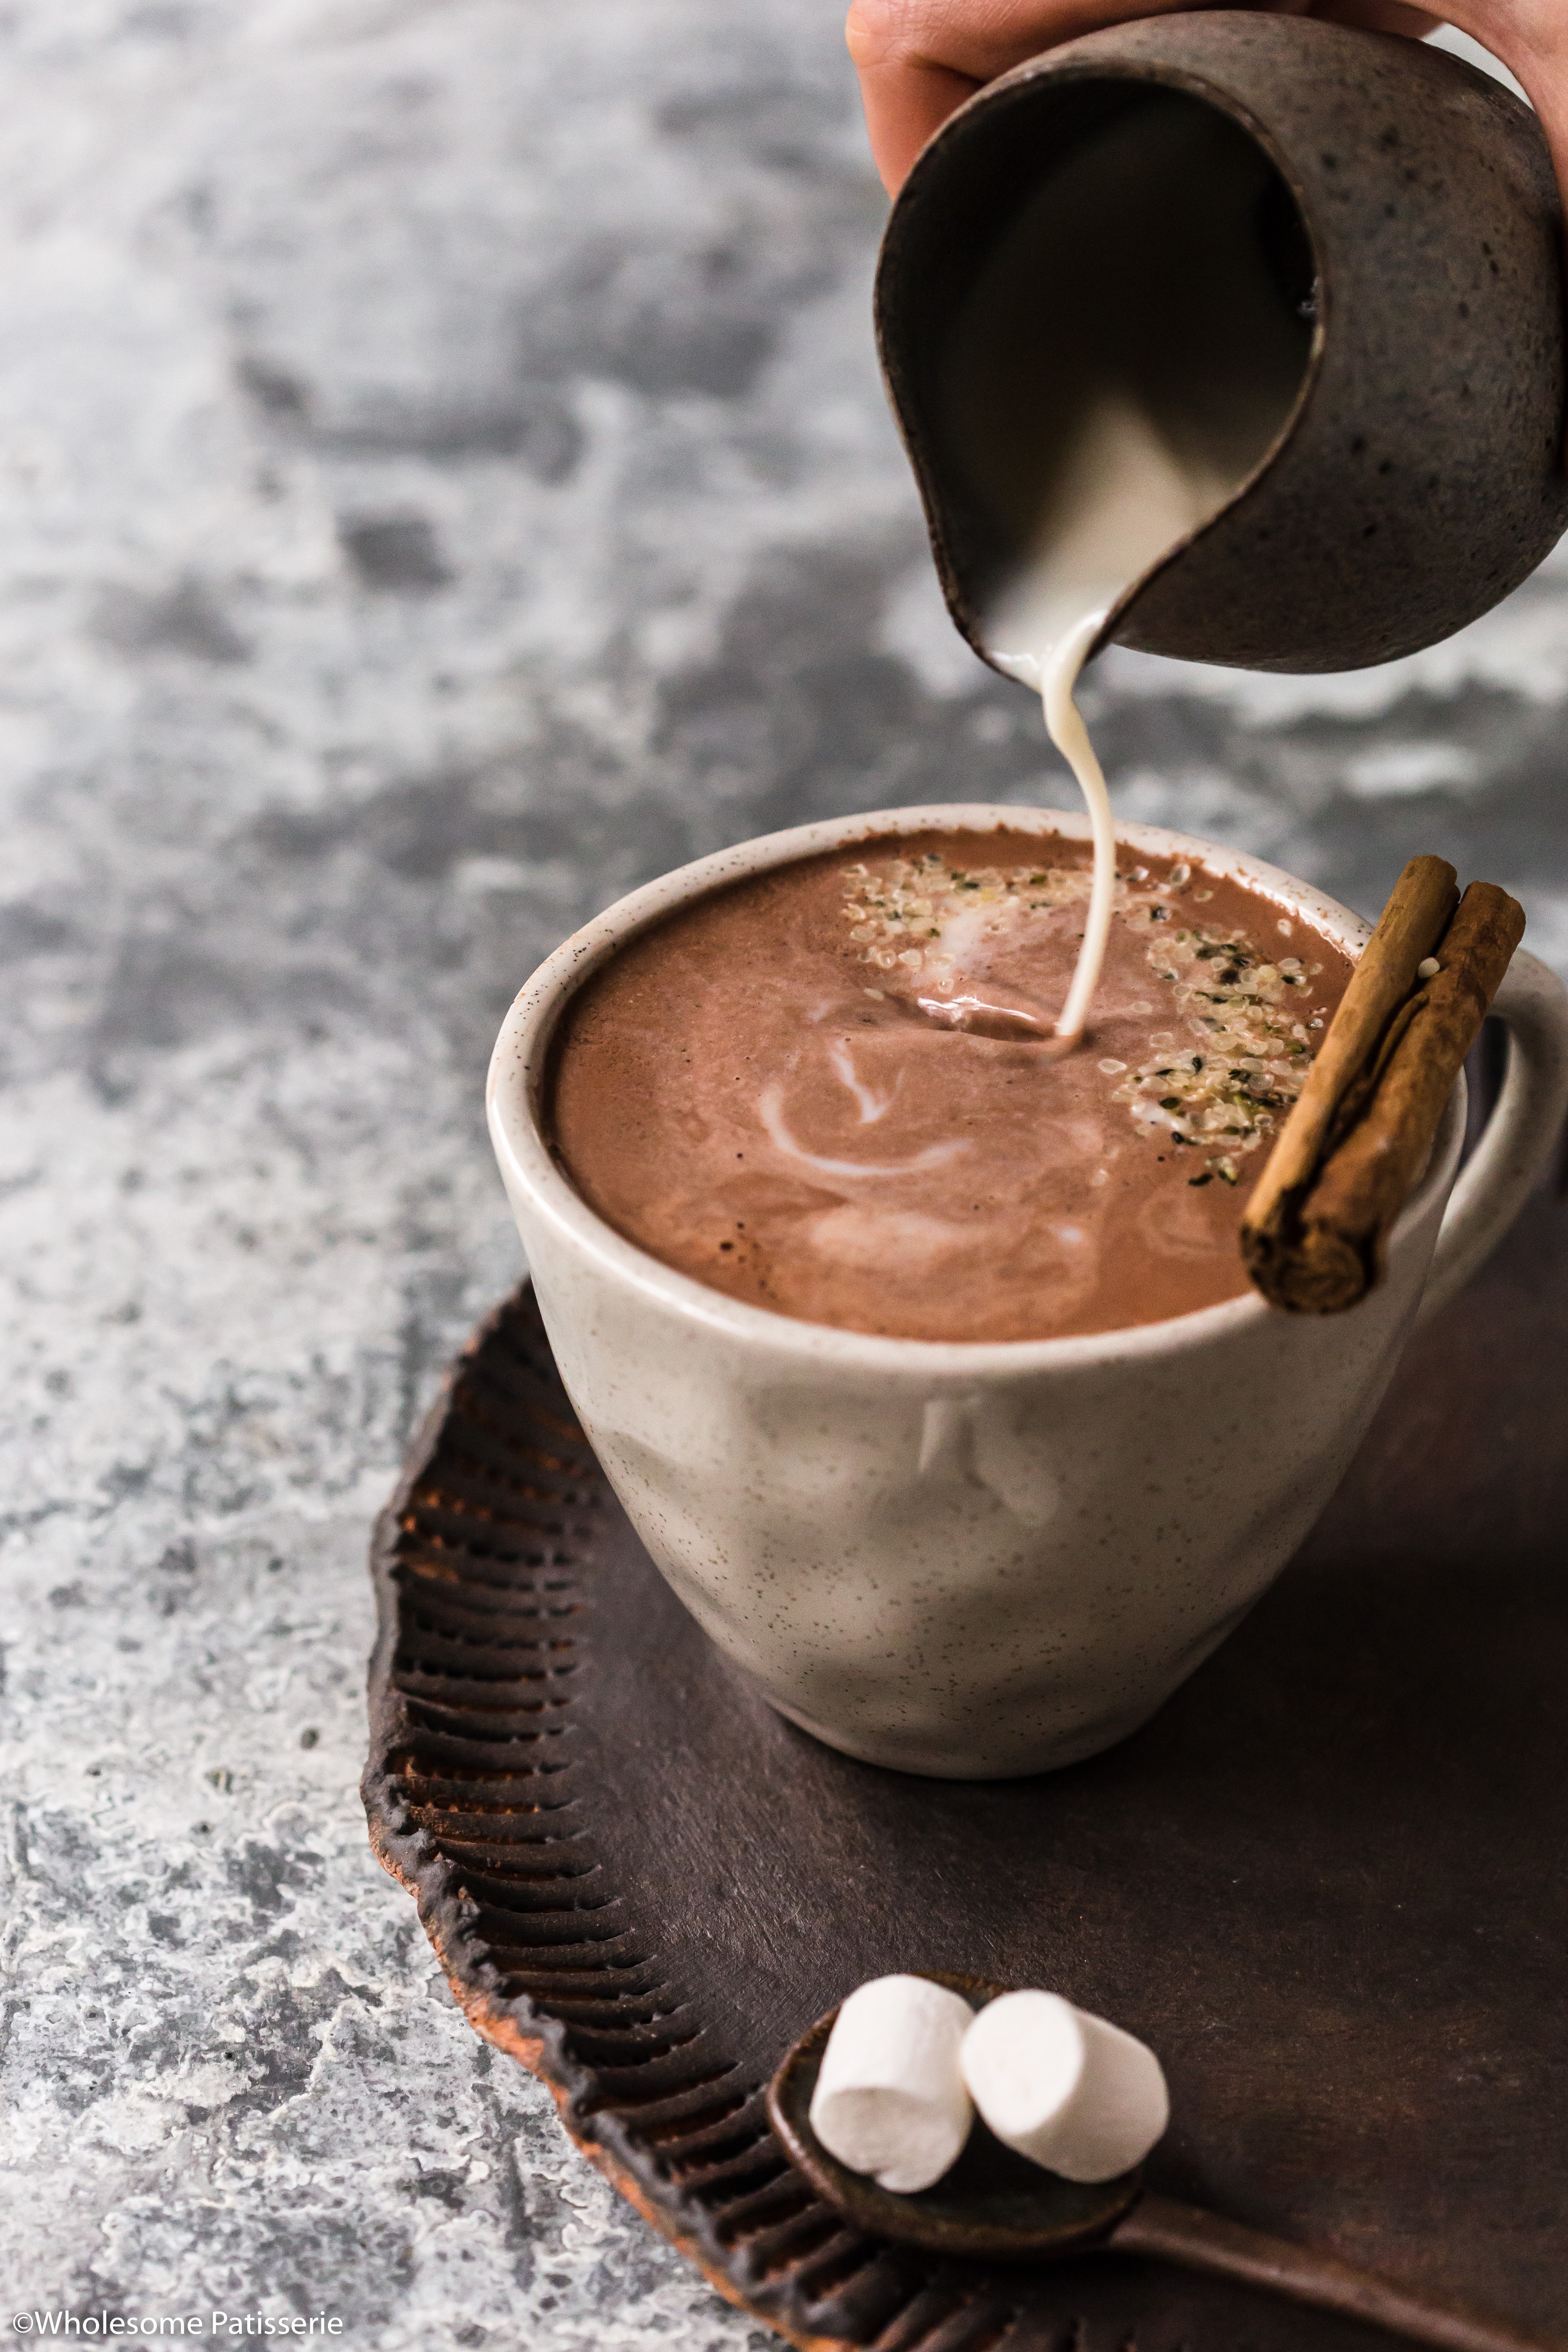 Hemp-milk-hot-chocolate-seeds-homemade-cocoa-under-10-ingredients-vegan-gluten-free-vegetarian-hot-cocoa